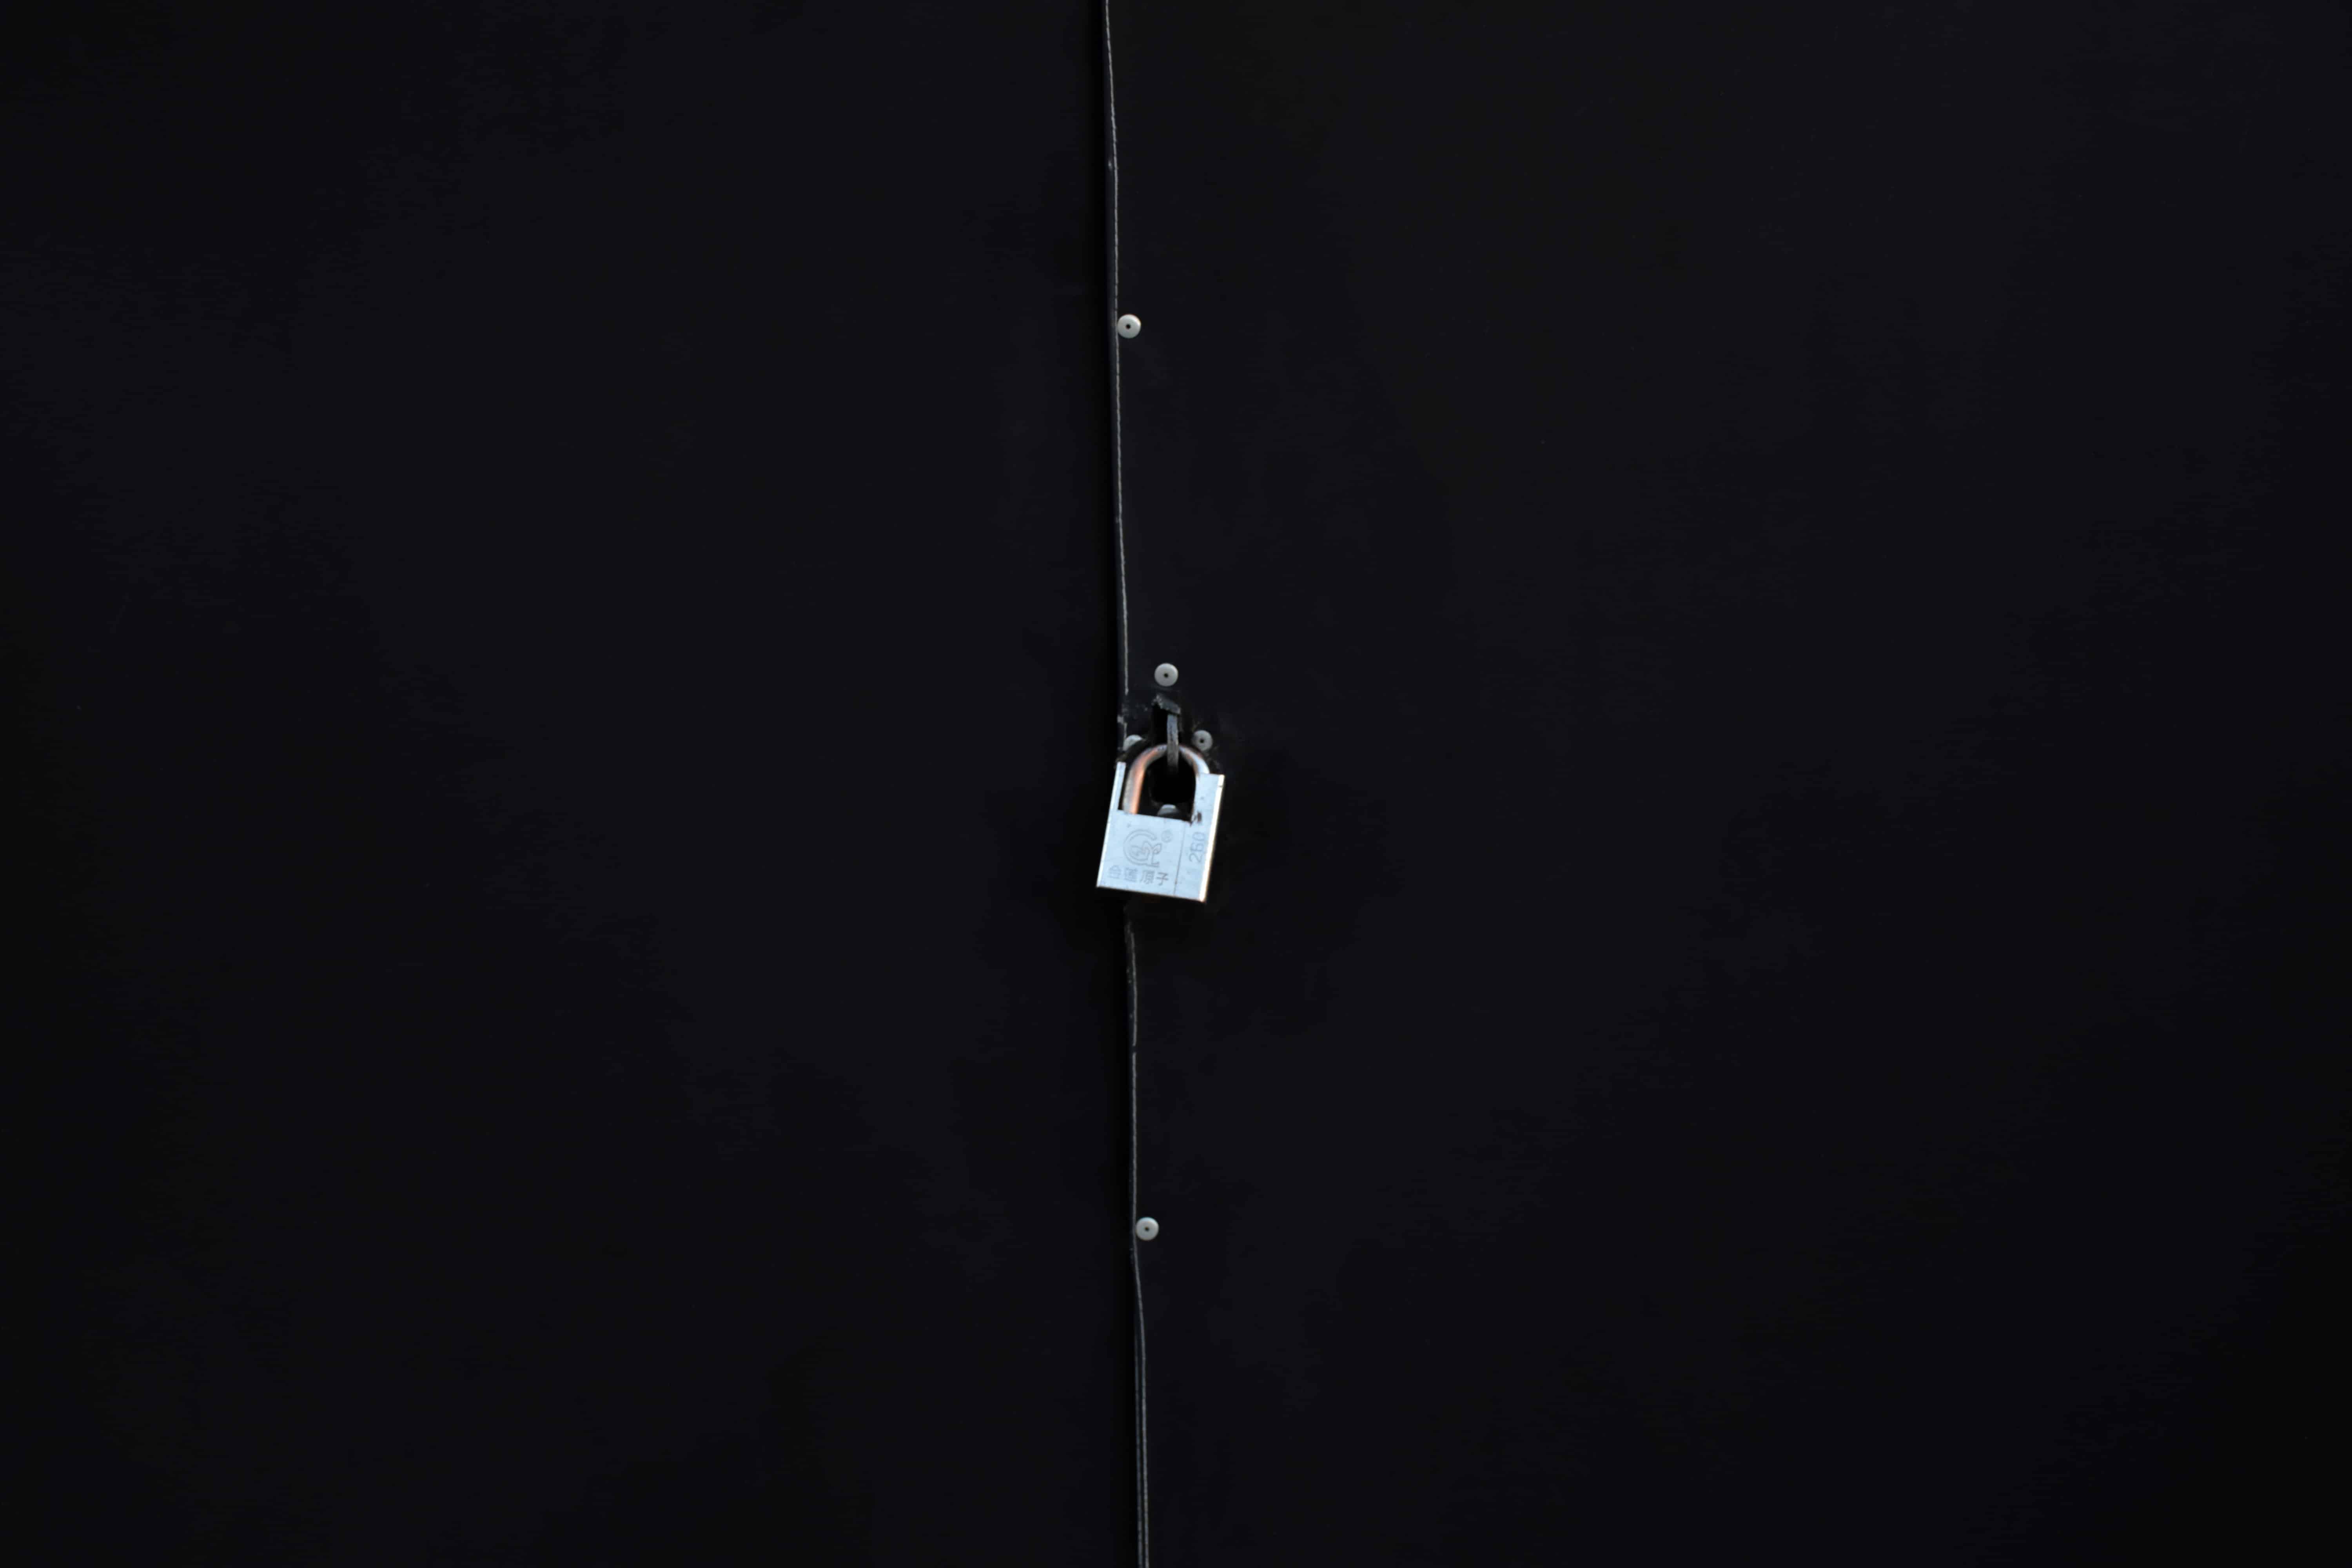 A padlock on a black door